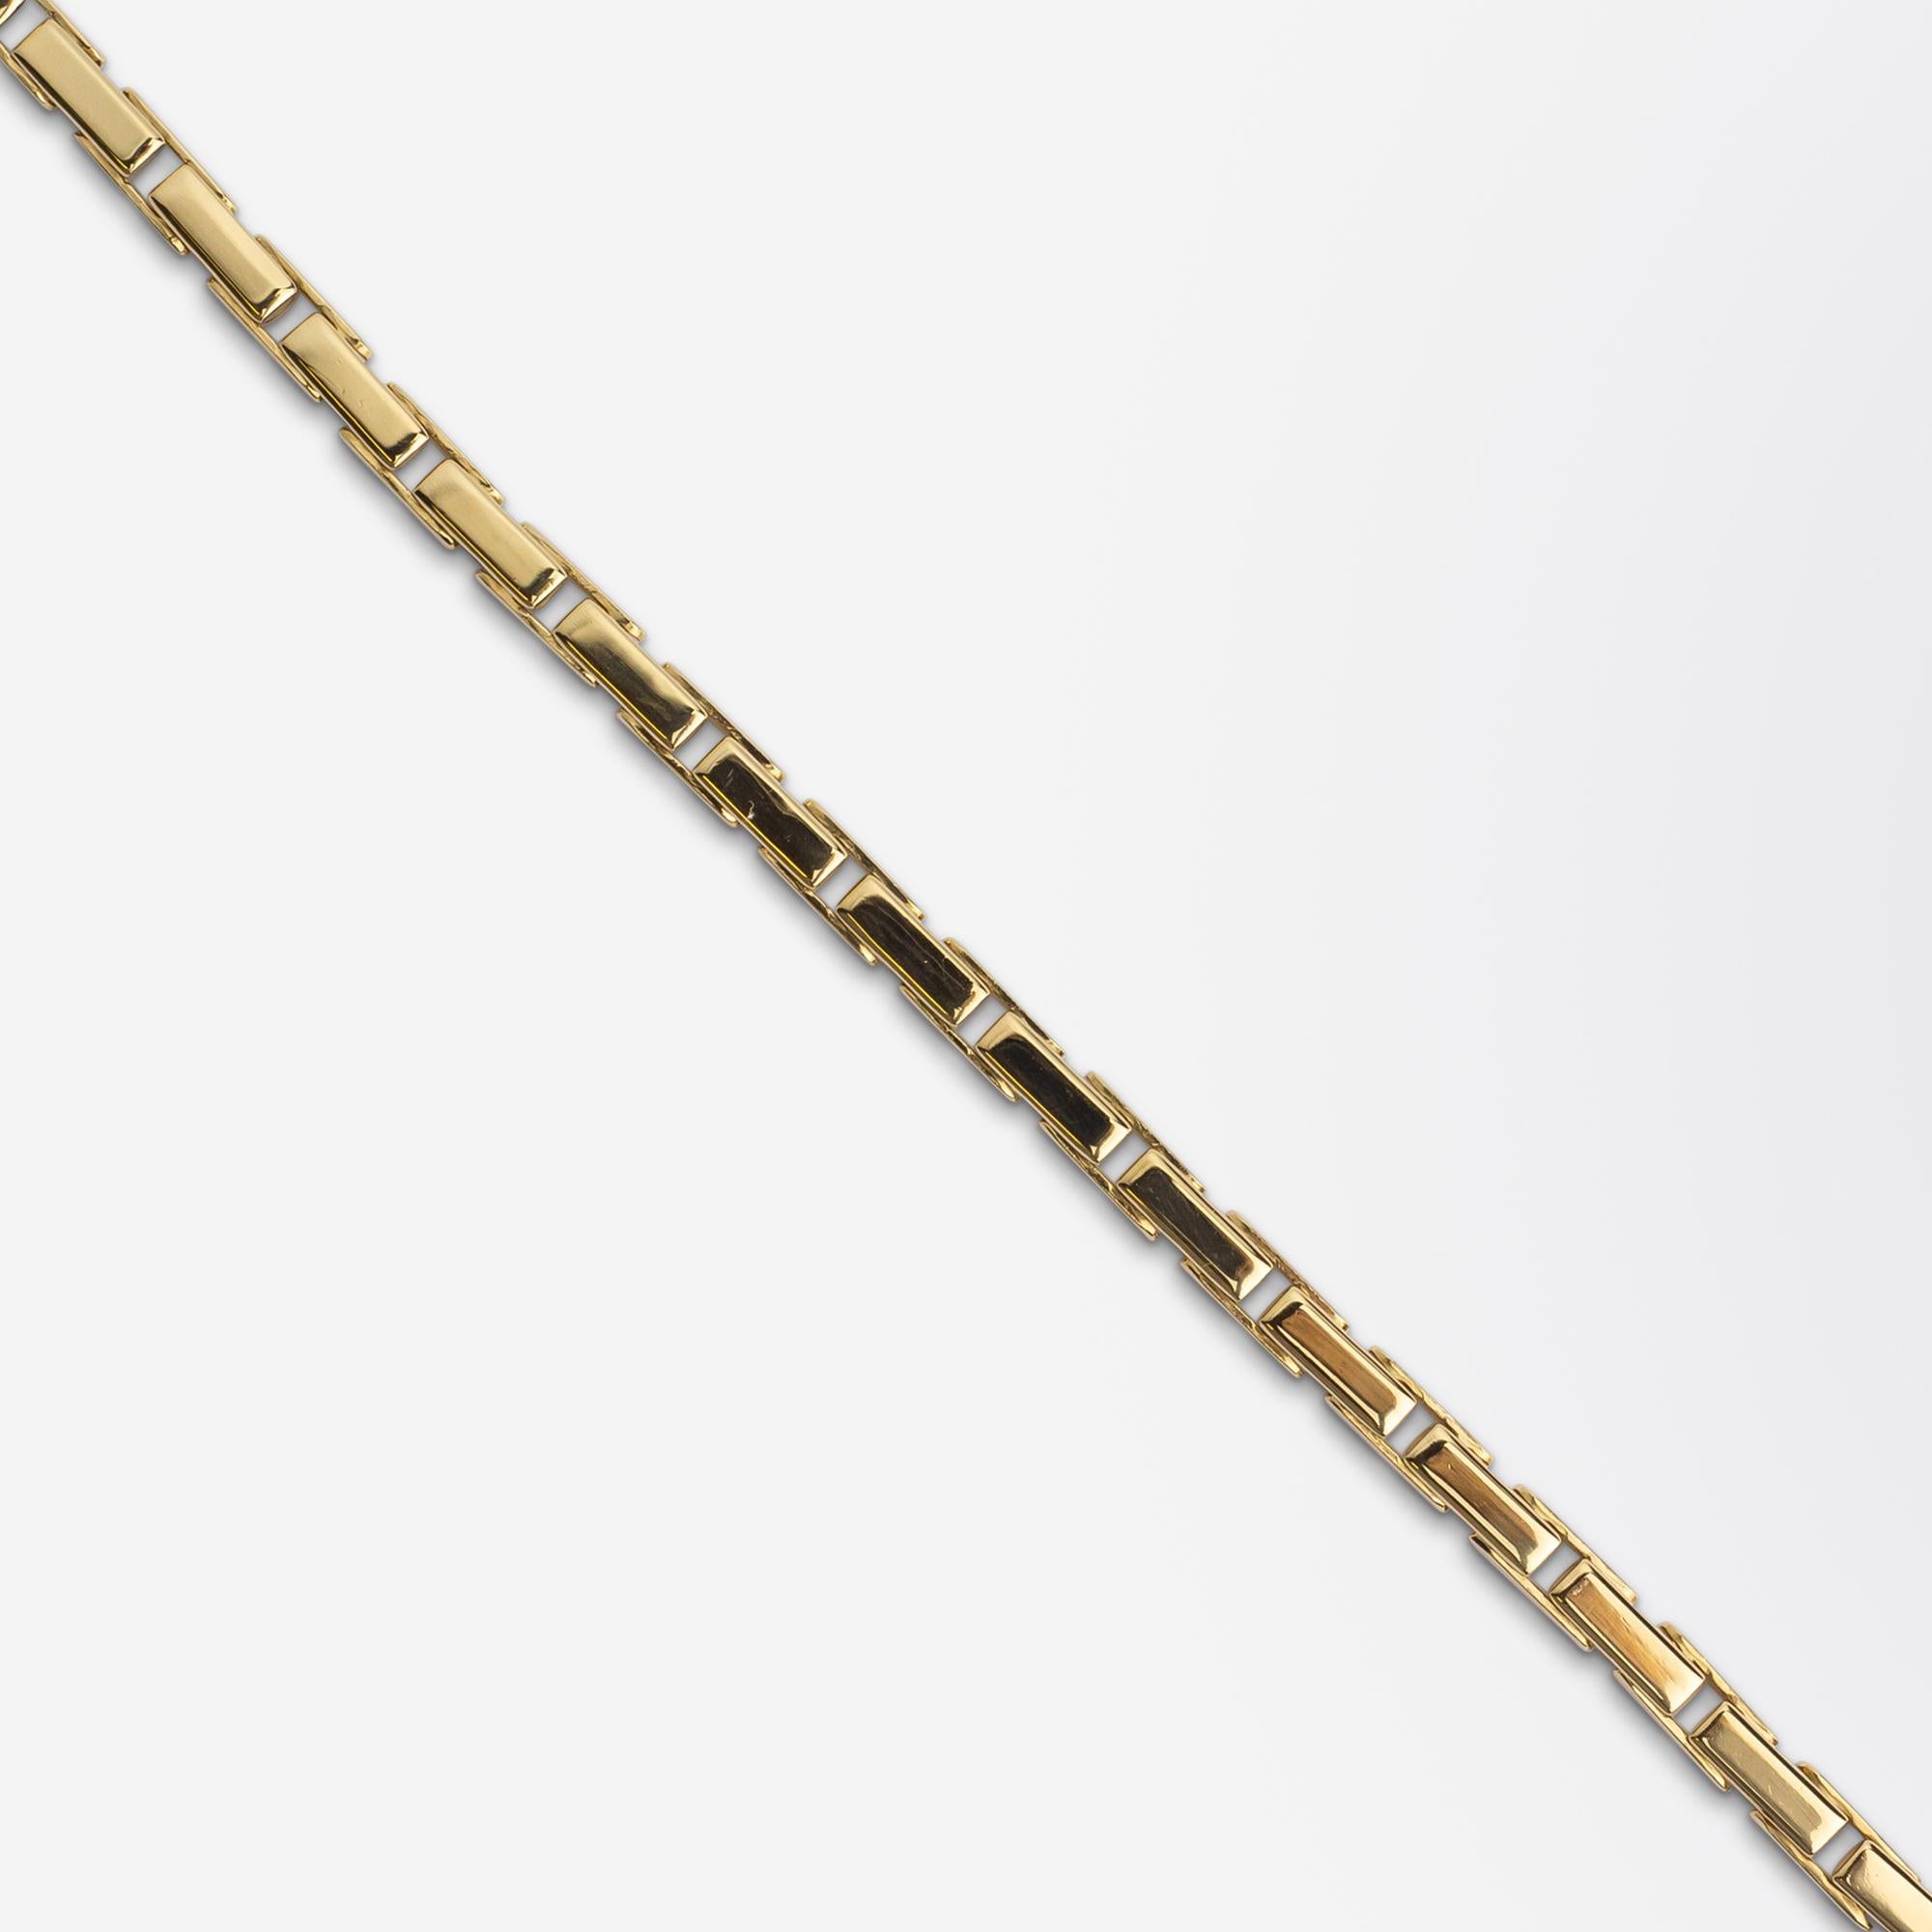 Modernist Cartier 'Agrafe' Bracelet in 18 Karat Yellow Gold